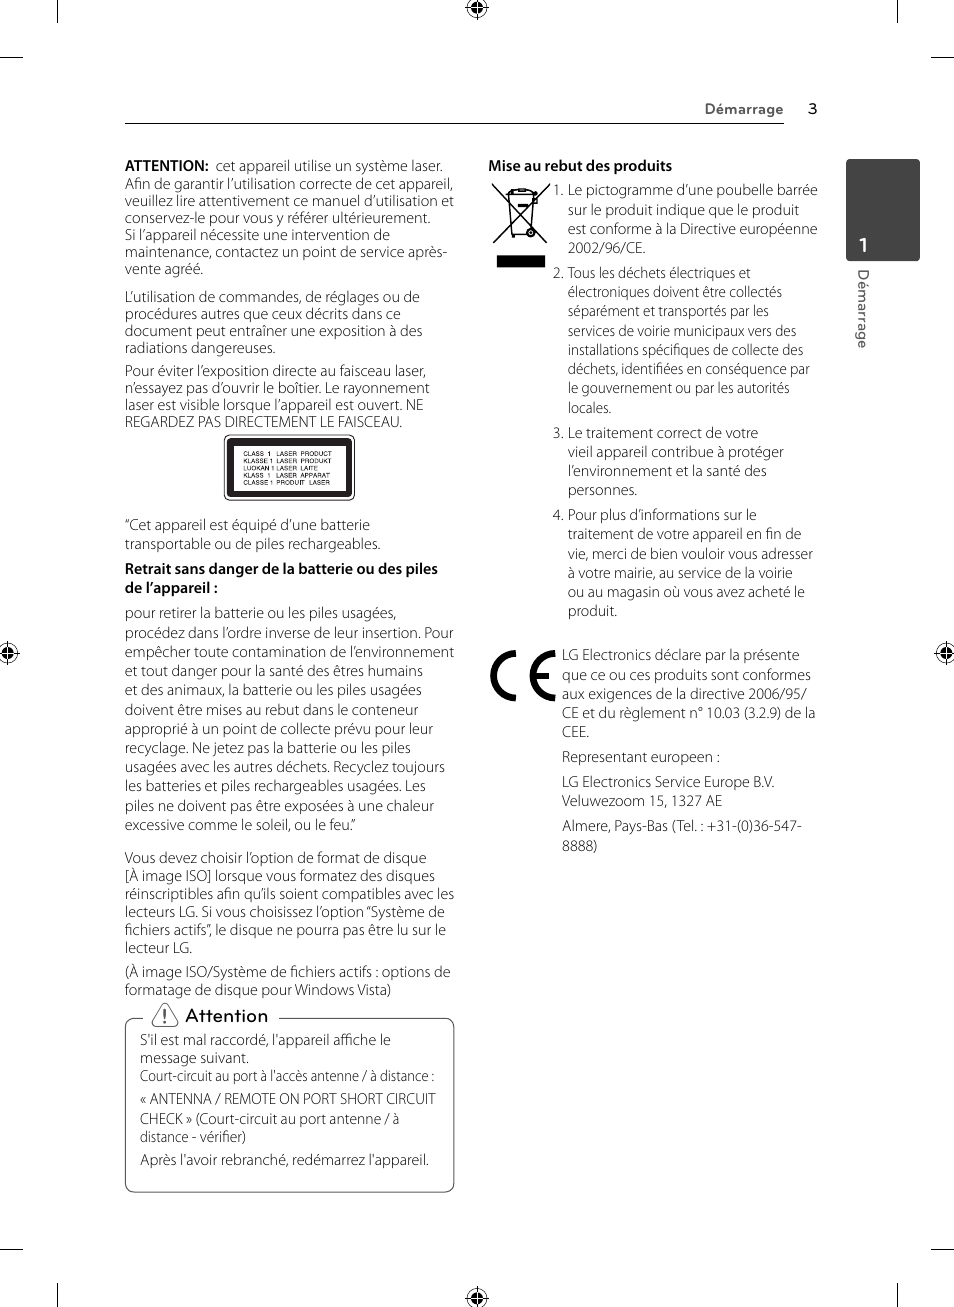 LG LCS110AR Manuel d'utilisation | Page 3 / 20